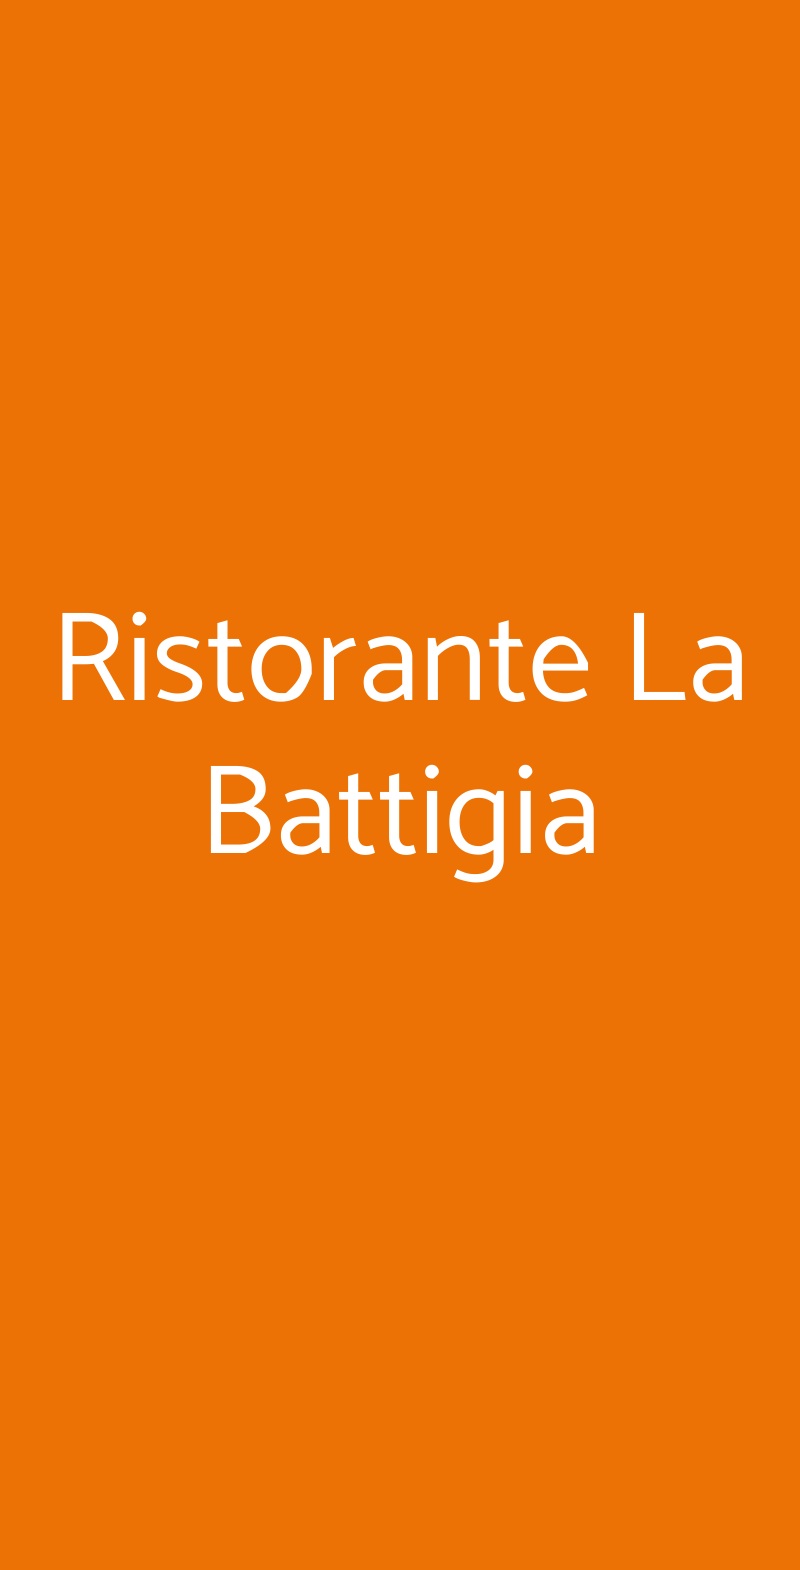 Ristorante La Battigia Bari menù 1 pagina